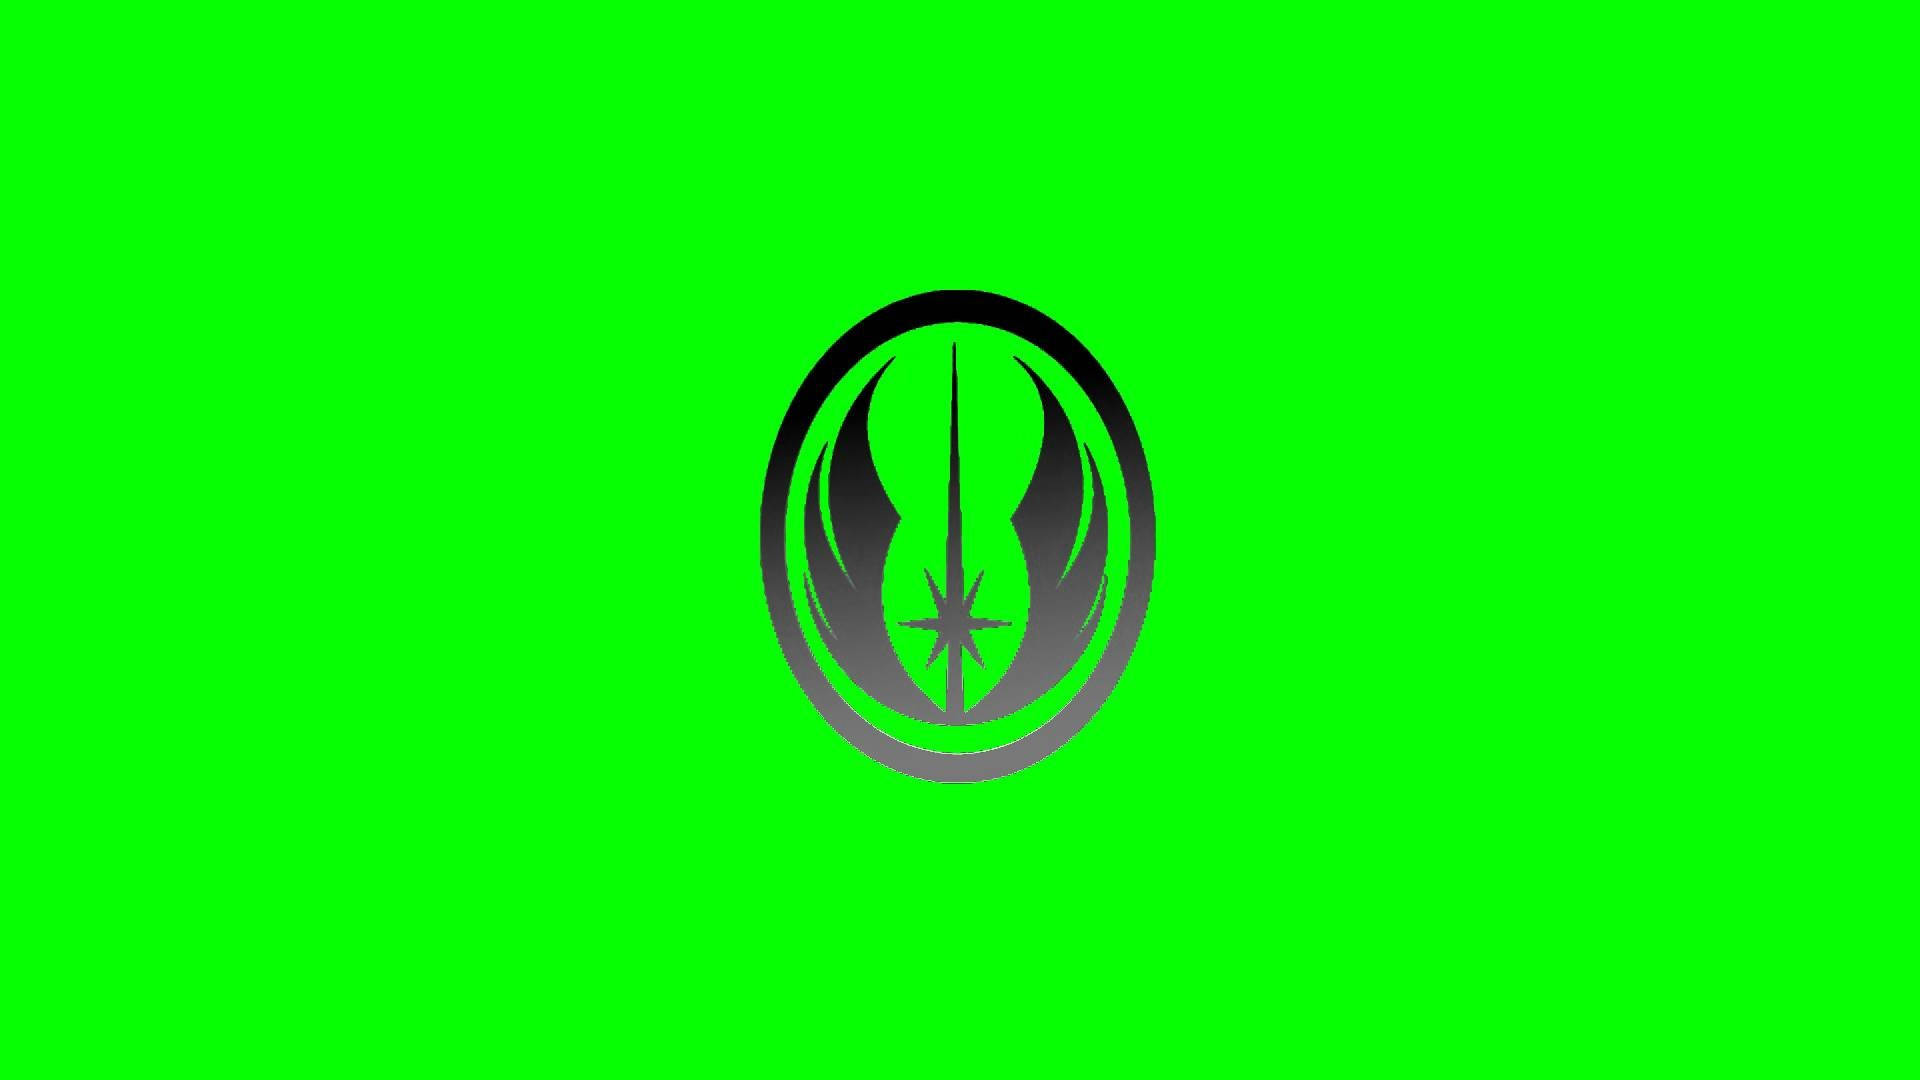 Jedi Order Insignia On A Green Screen Background